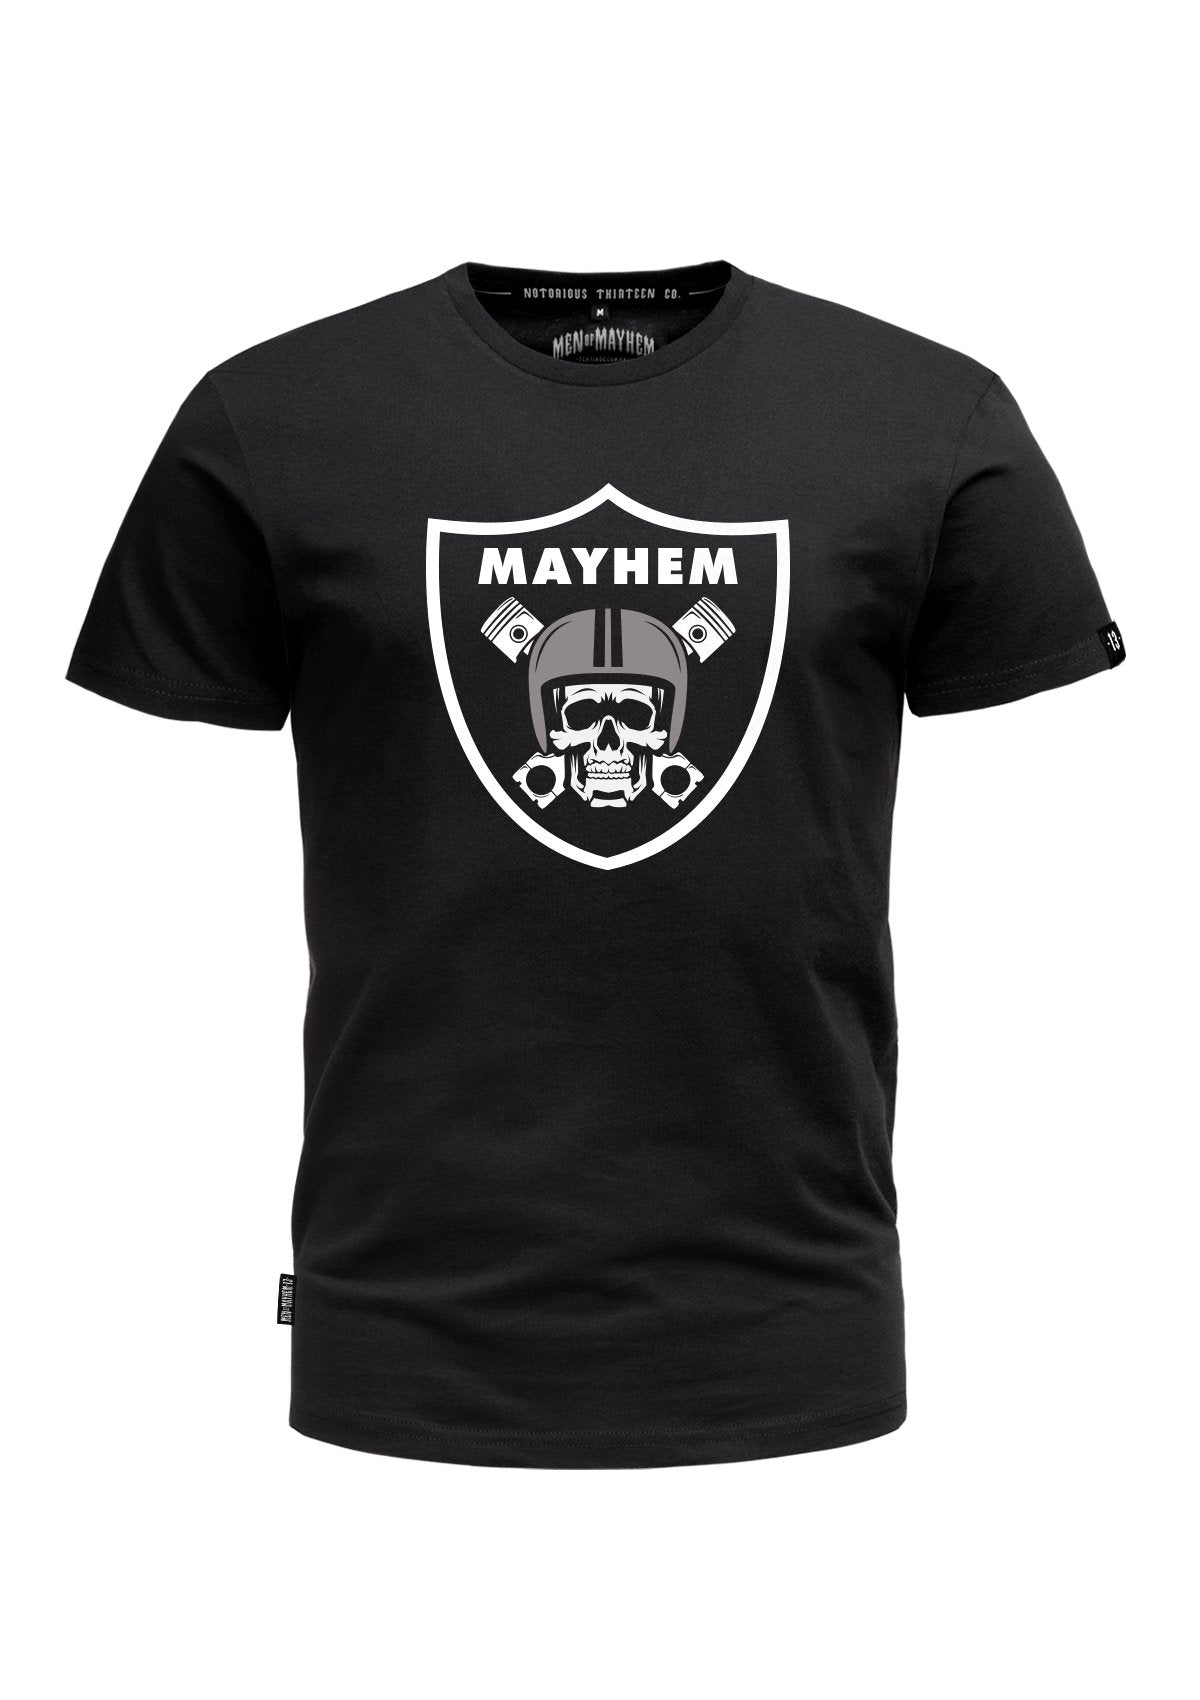 T-Shirt Mayhem Revolt S/W - MEN OF MAYHEM - ALAIKO-EXCHANGES-MM-M-1010-MR-SW - black - Men